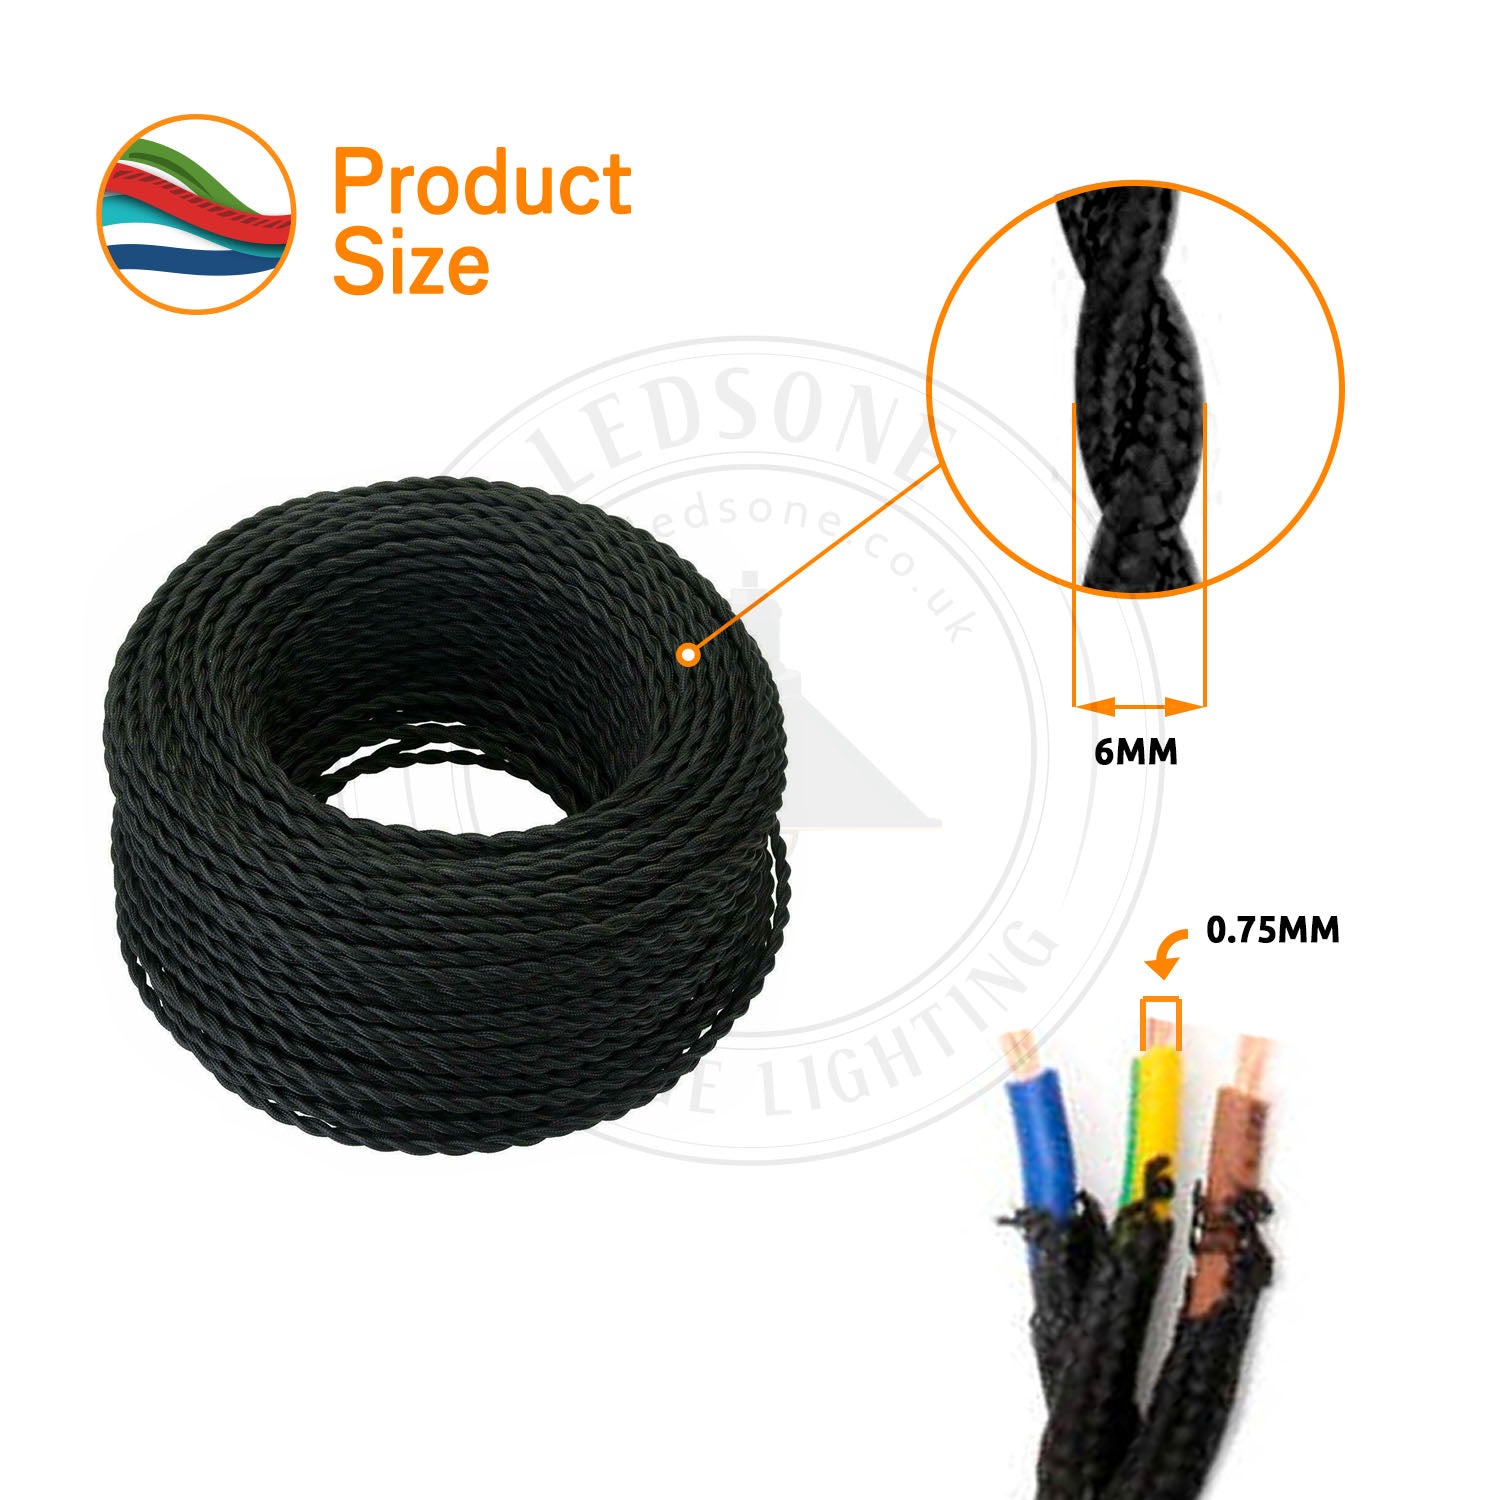 Black fabric Braided Cable.JPG